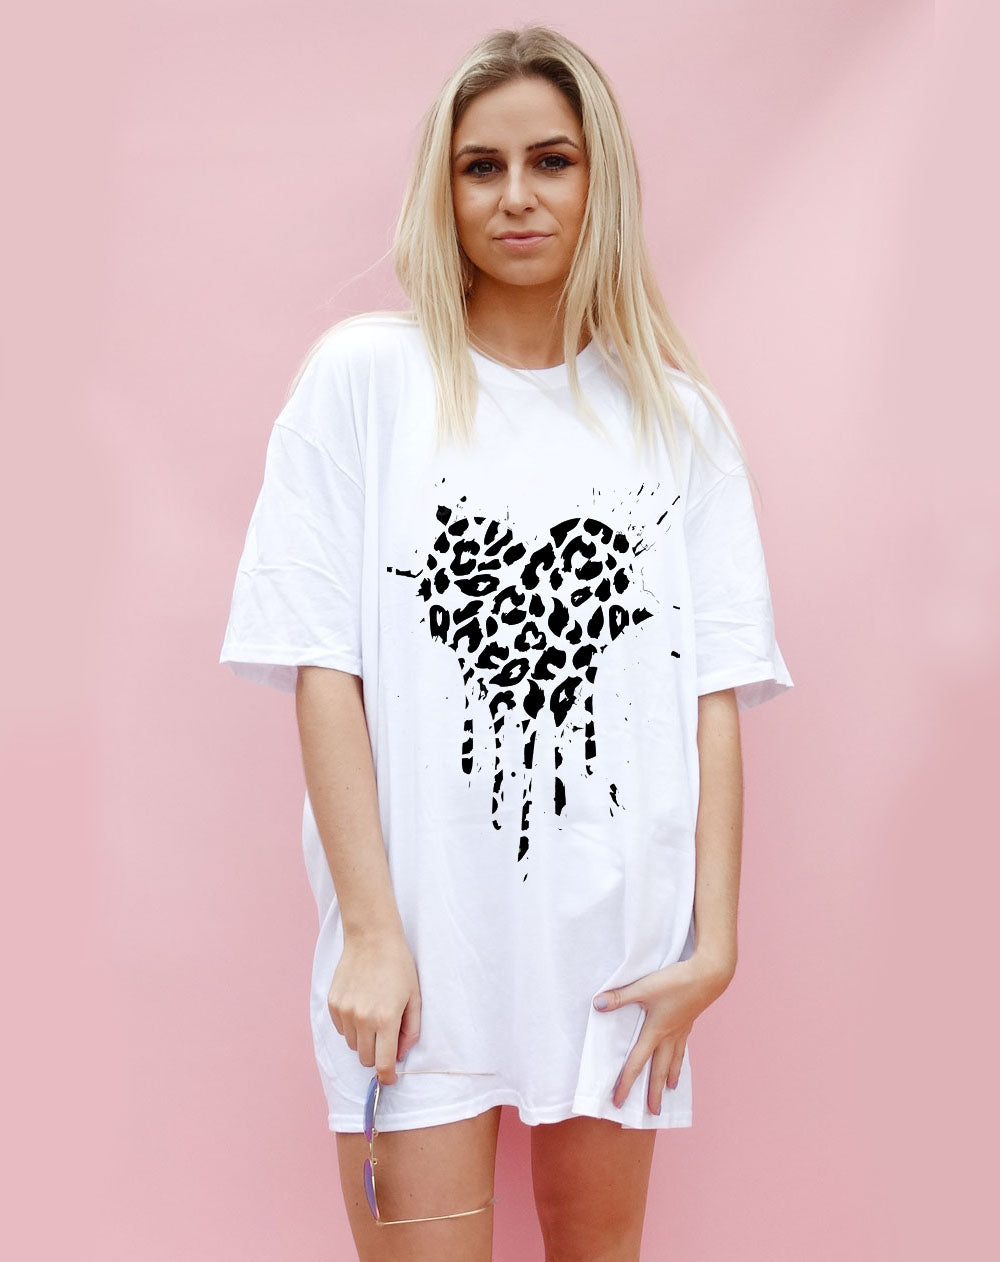 Monochrome Leopard Print Heart Drip Splatter Oversize Tshirt Dress